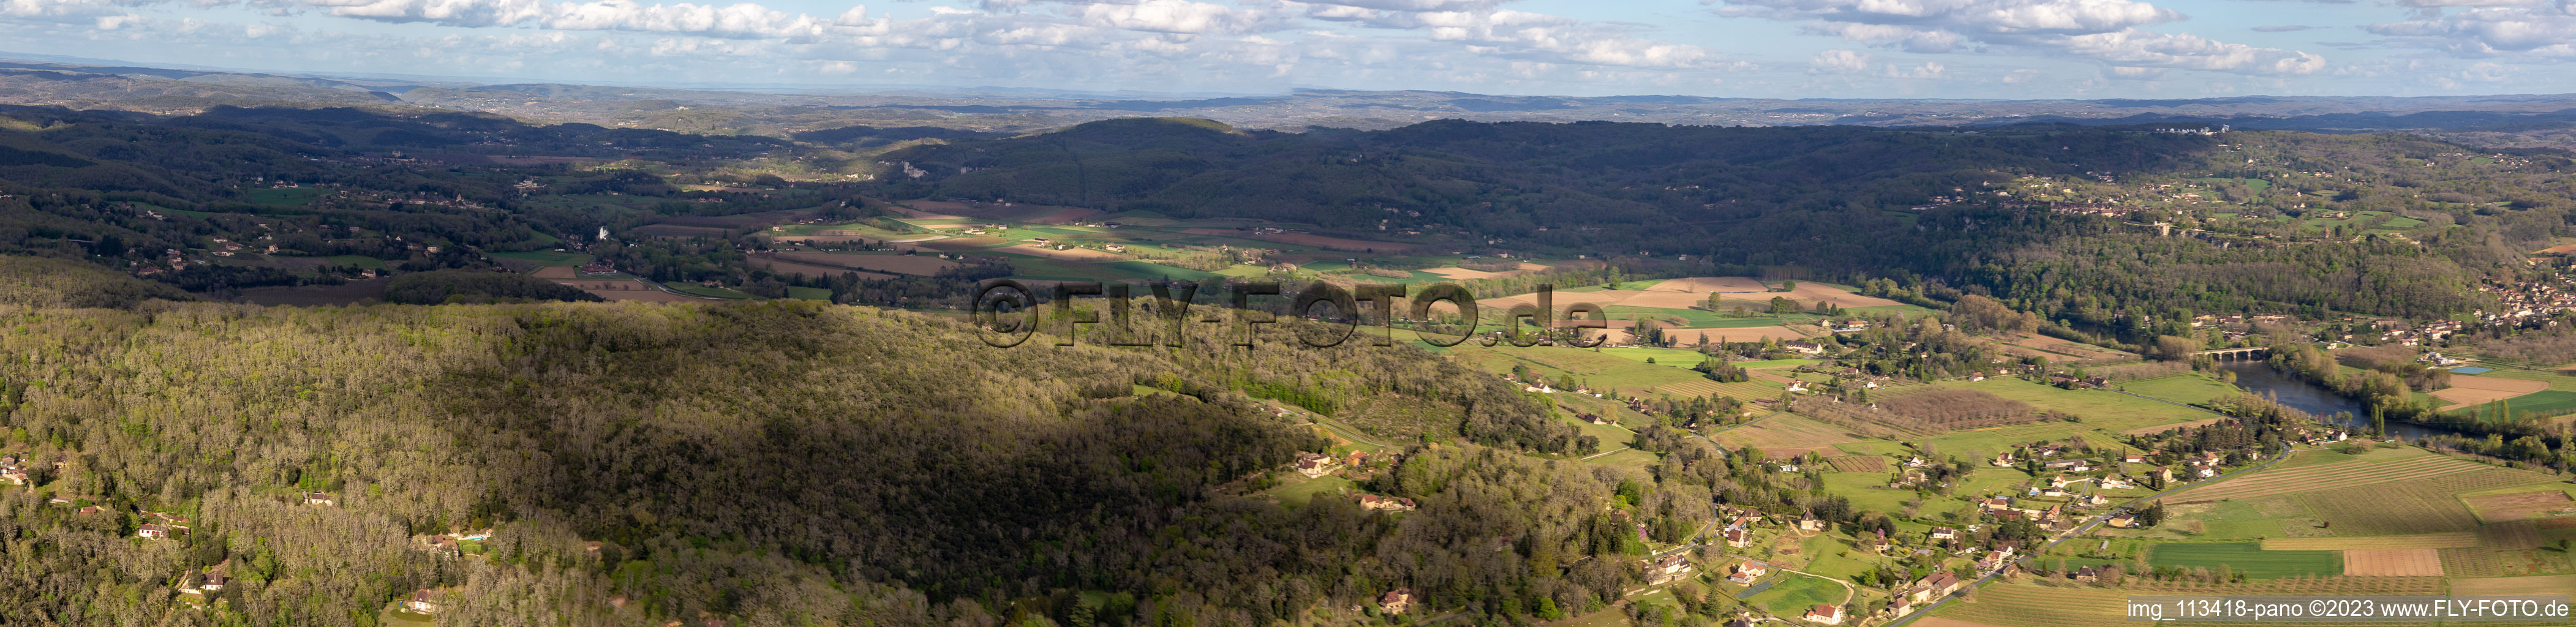 Panorama des Perigord in La Roque-Gageac im Bundesland Dordogne, Frankreich